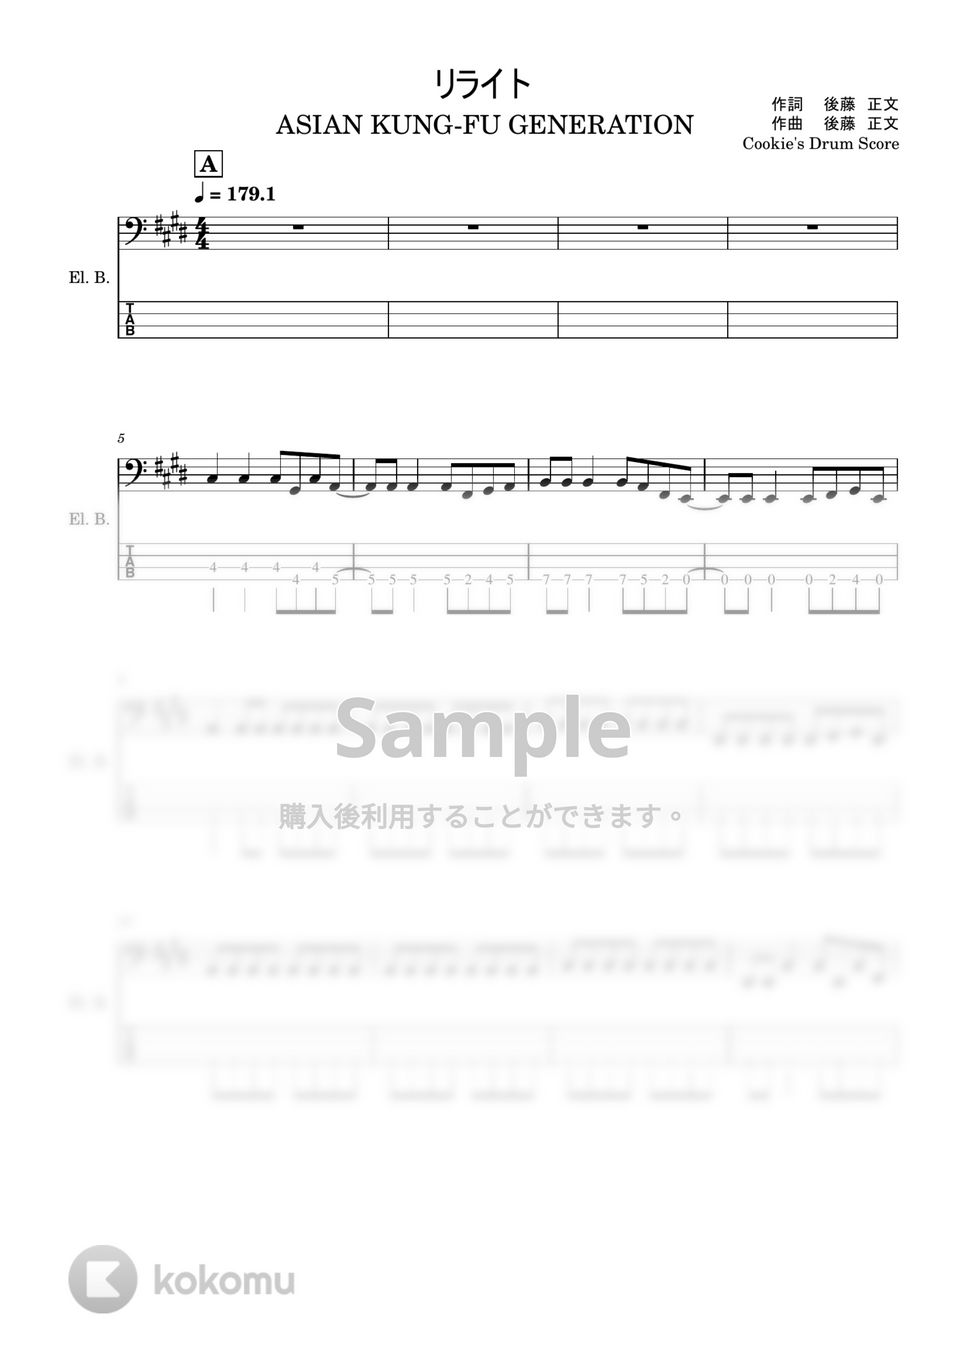 ASIAN KUNG-FU GENERATION - 【ベース楽譜】 リライト / ASIAN KUNG-FU GENERATION - Rewrite / ASIAN KUNG-FU GENERATION 【BassScore】 by Cookie's Drum Score